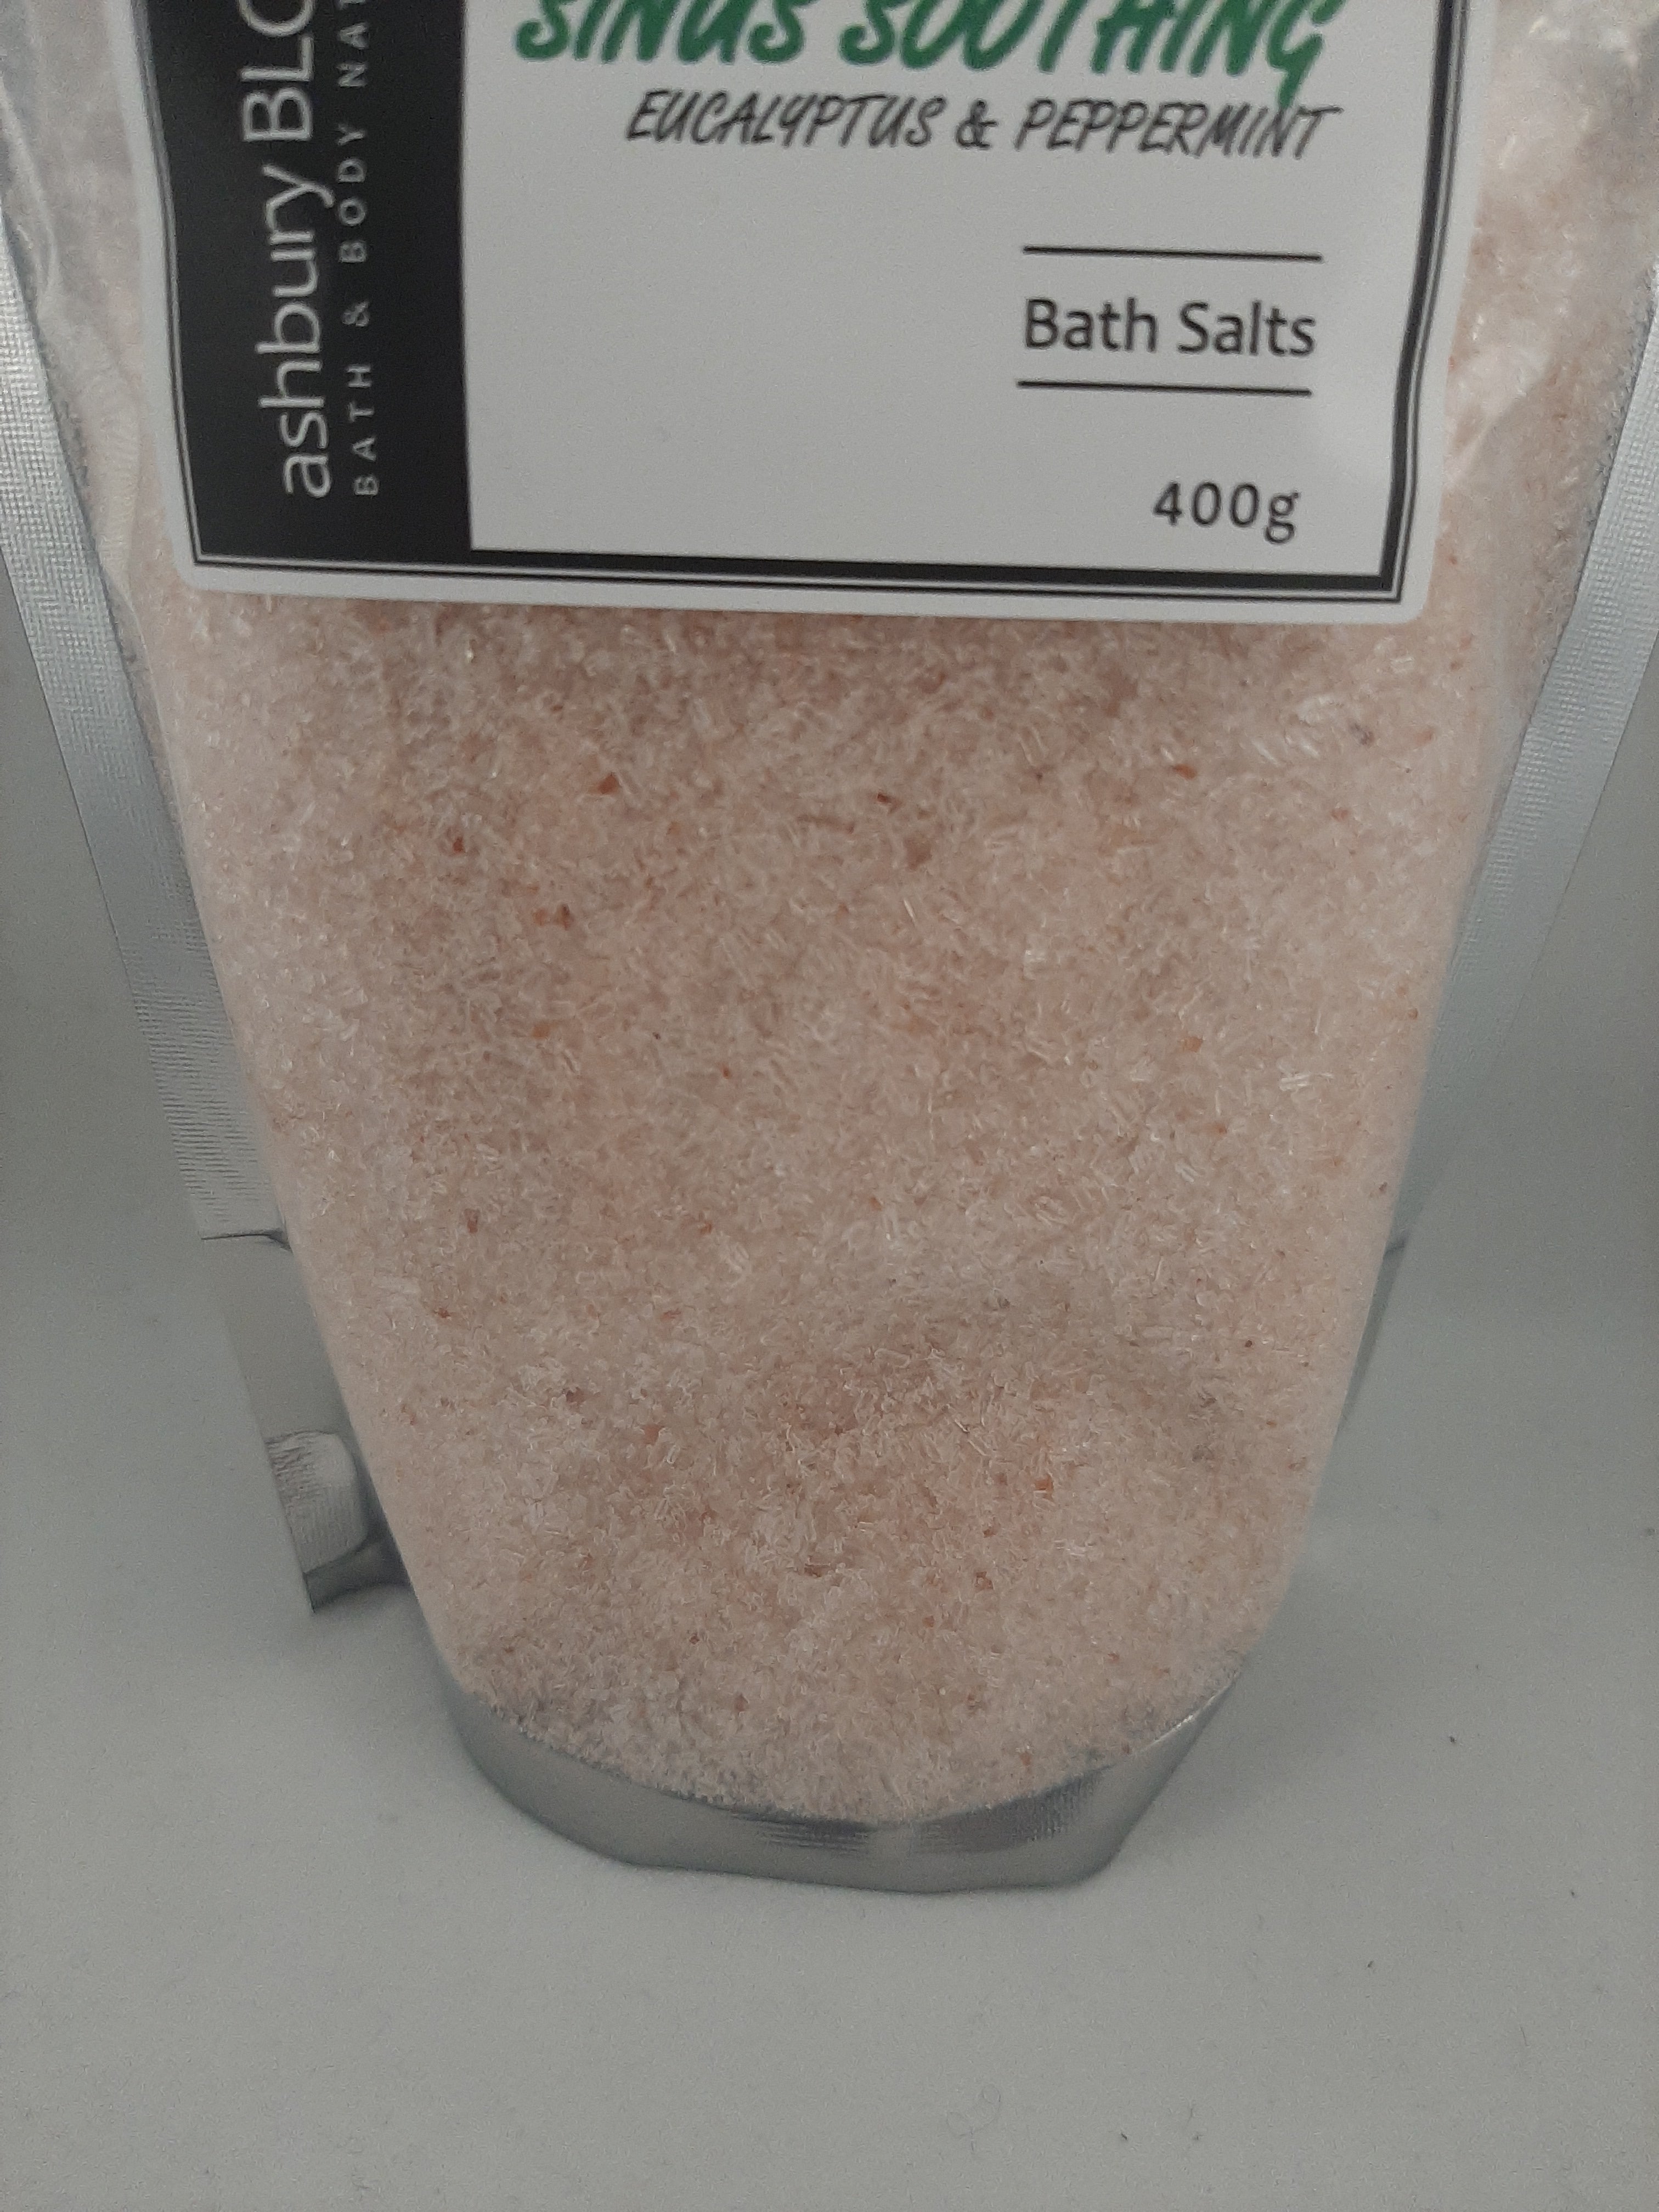 Sinus Soothing Bath Salts